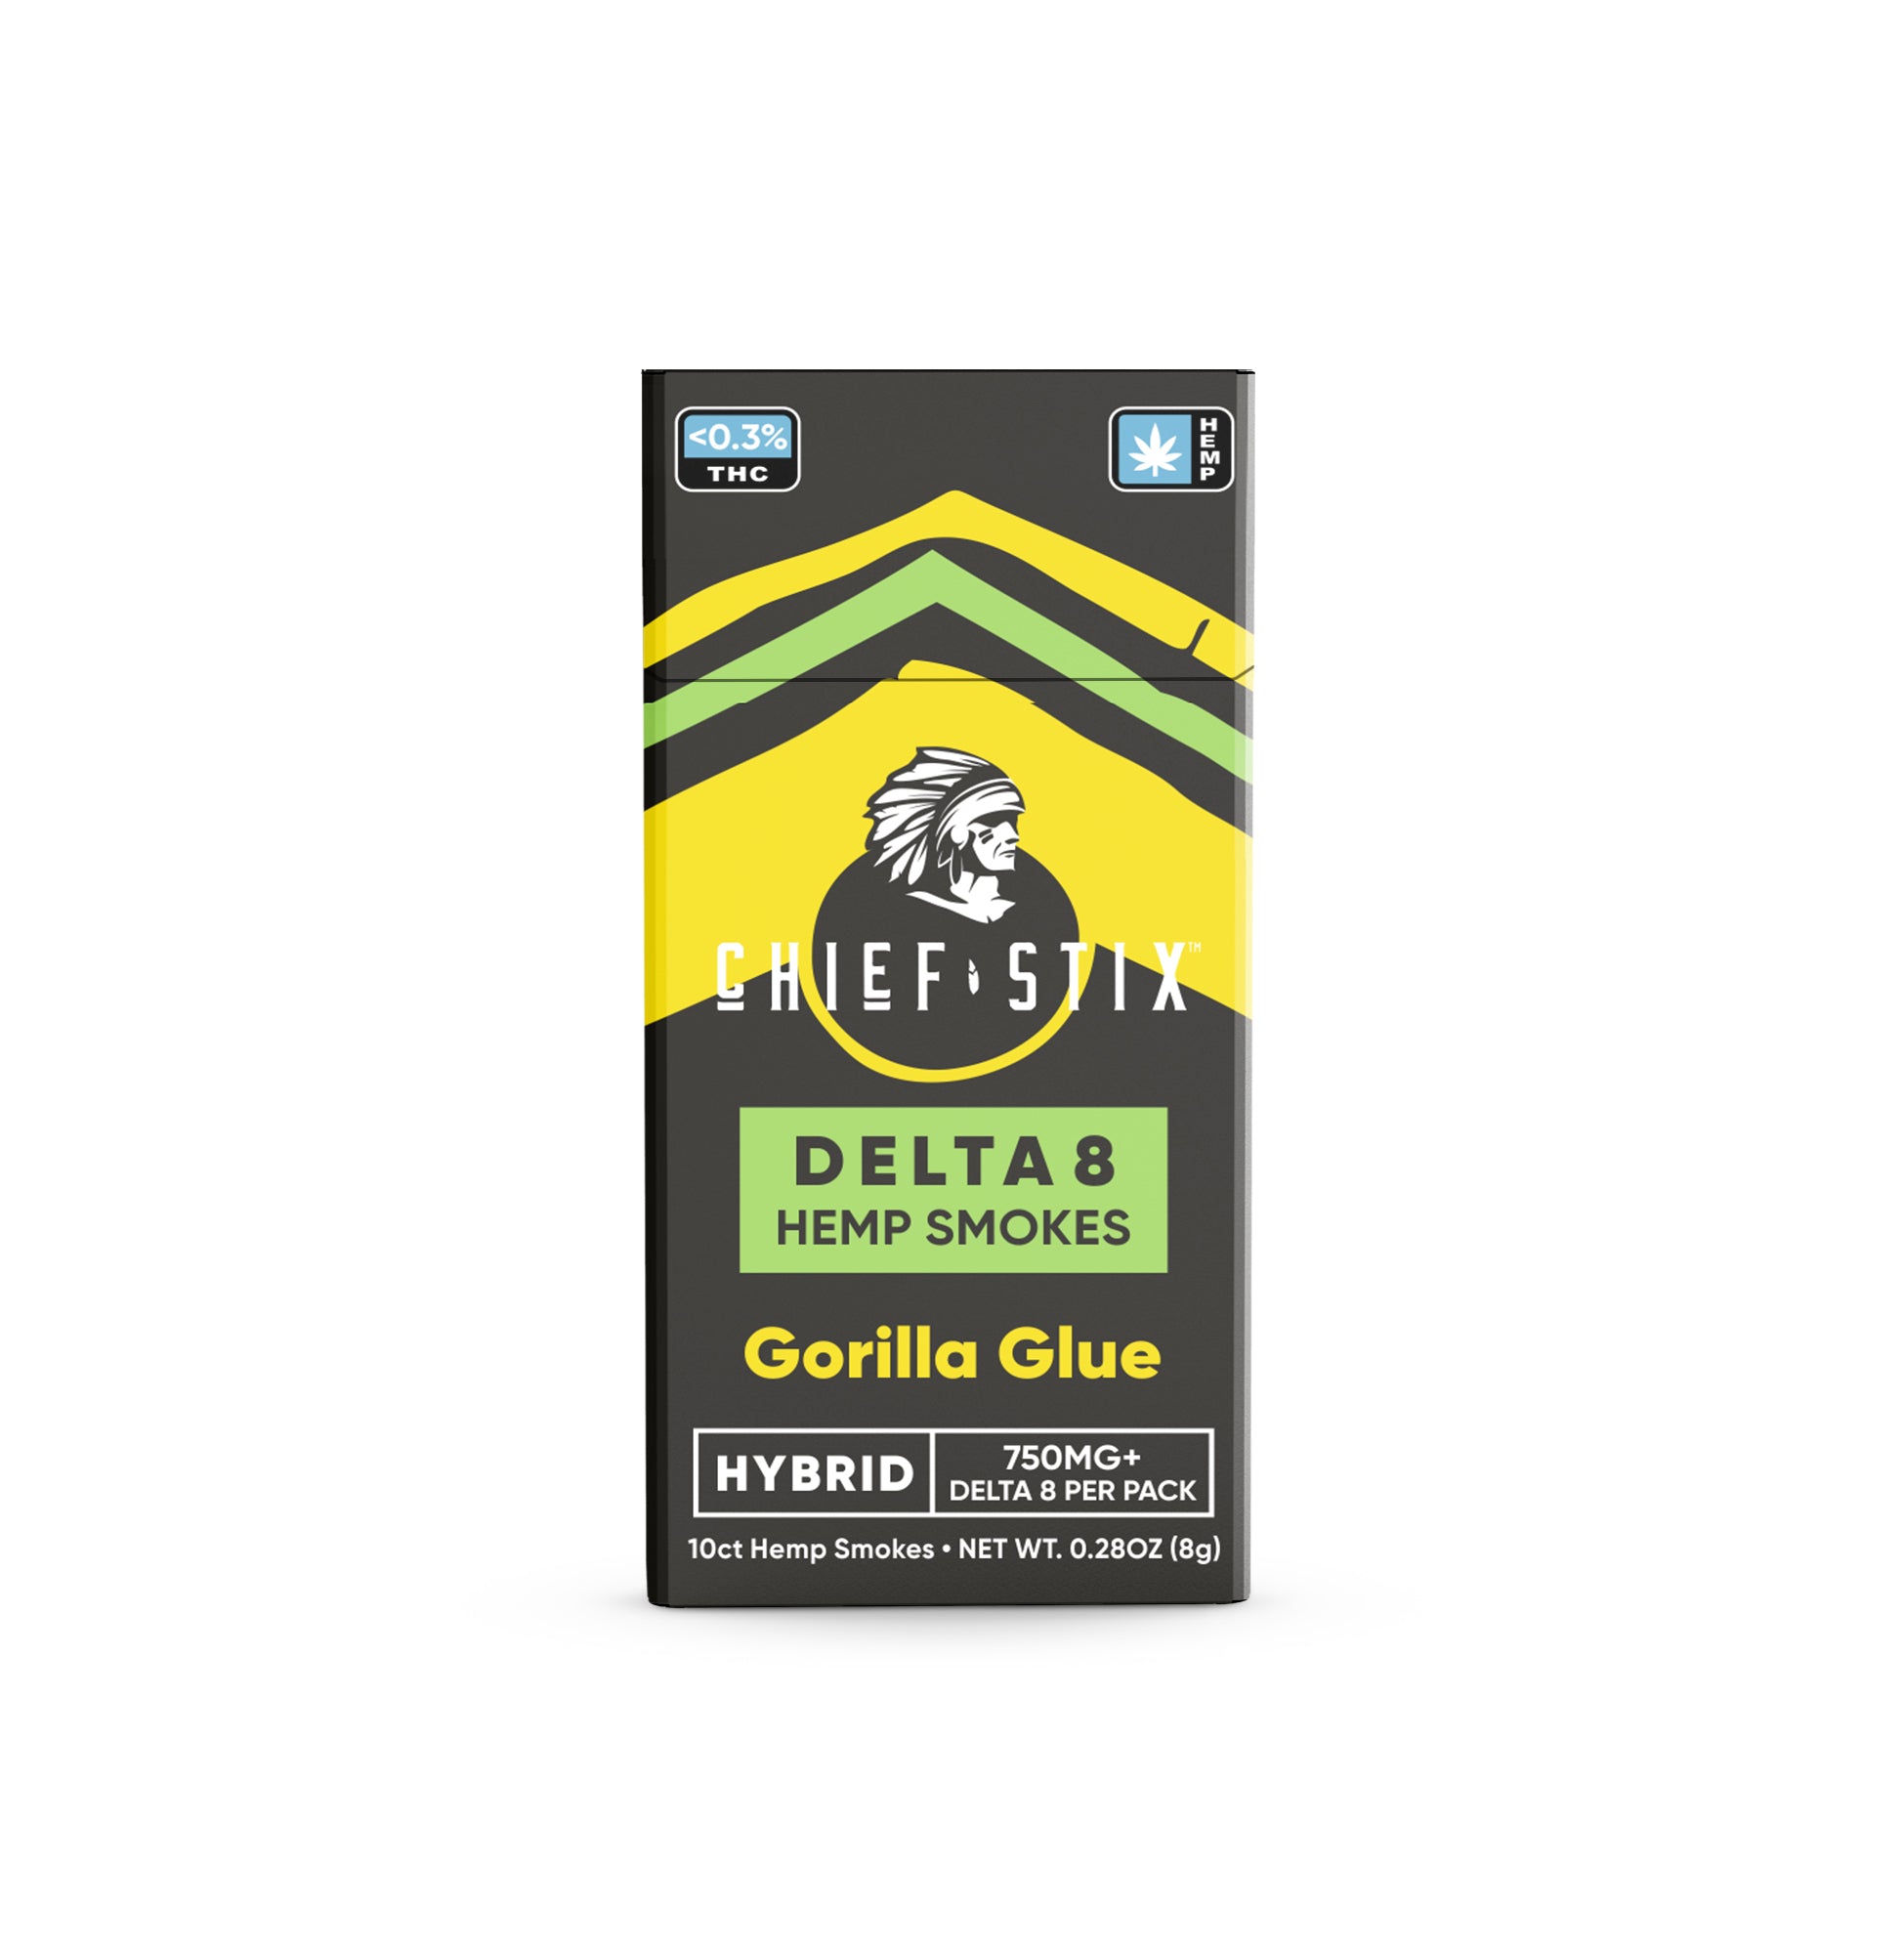 Chief Stix Delta8 Hemp Smokes 750mg Gorilla Glue (10ct) - Carton